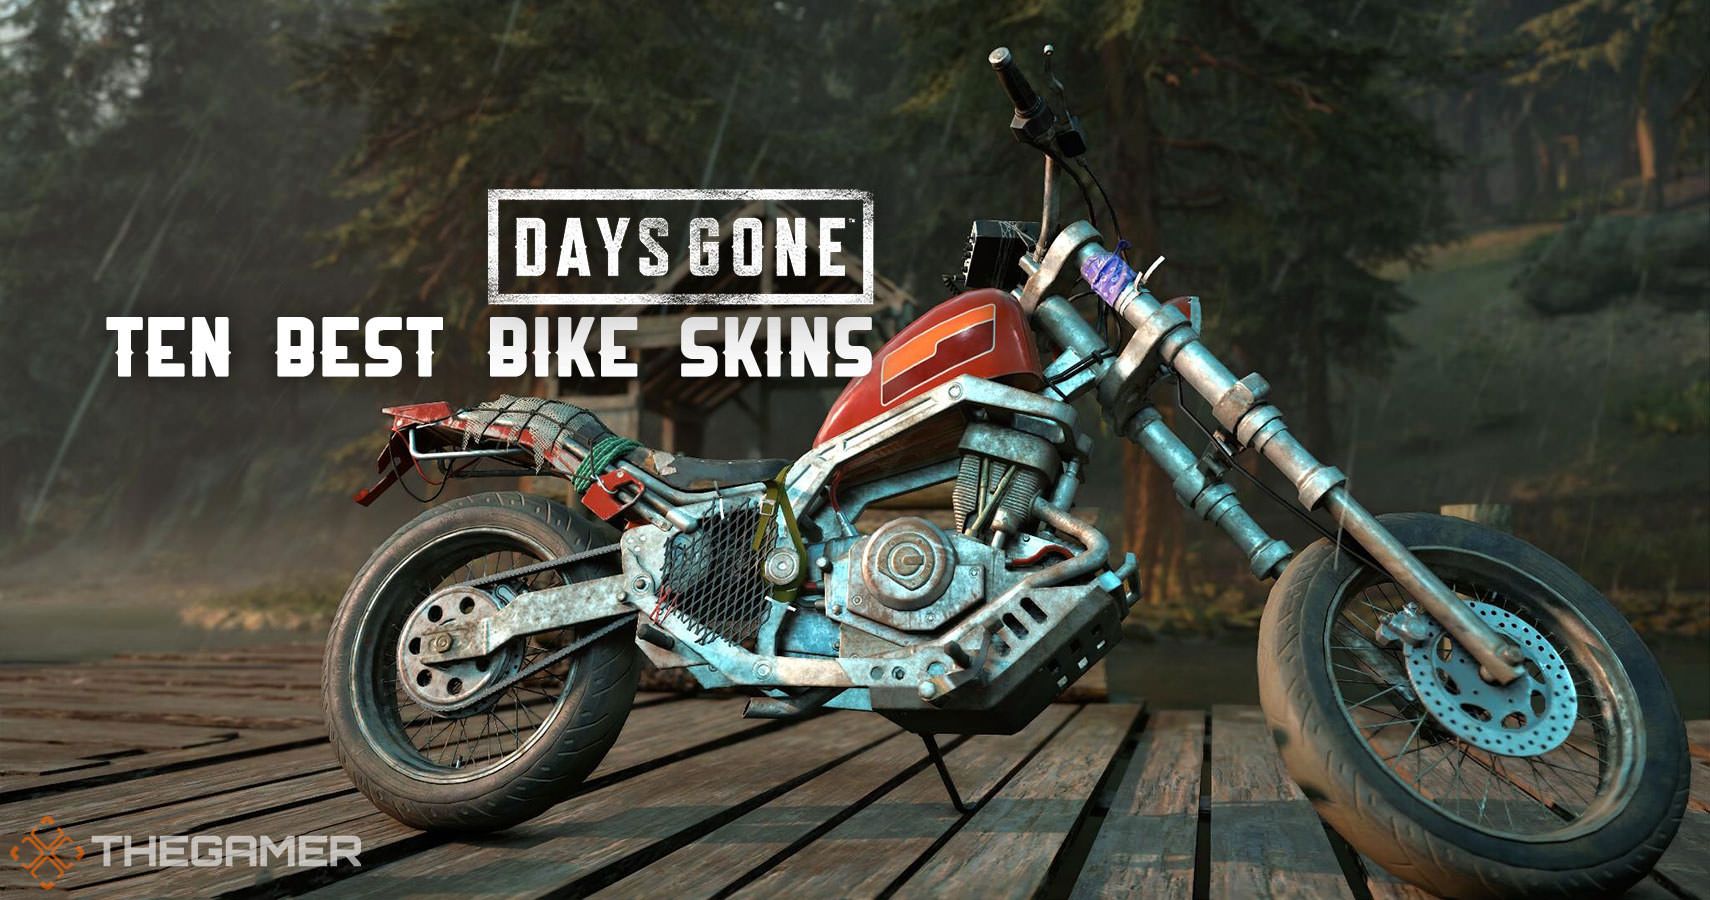 Days gone байк. Рация мотоцикл Days gone. Days gone best Bike. Скин на мотоцикл фэйд ласт дей. Days gone bike